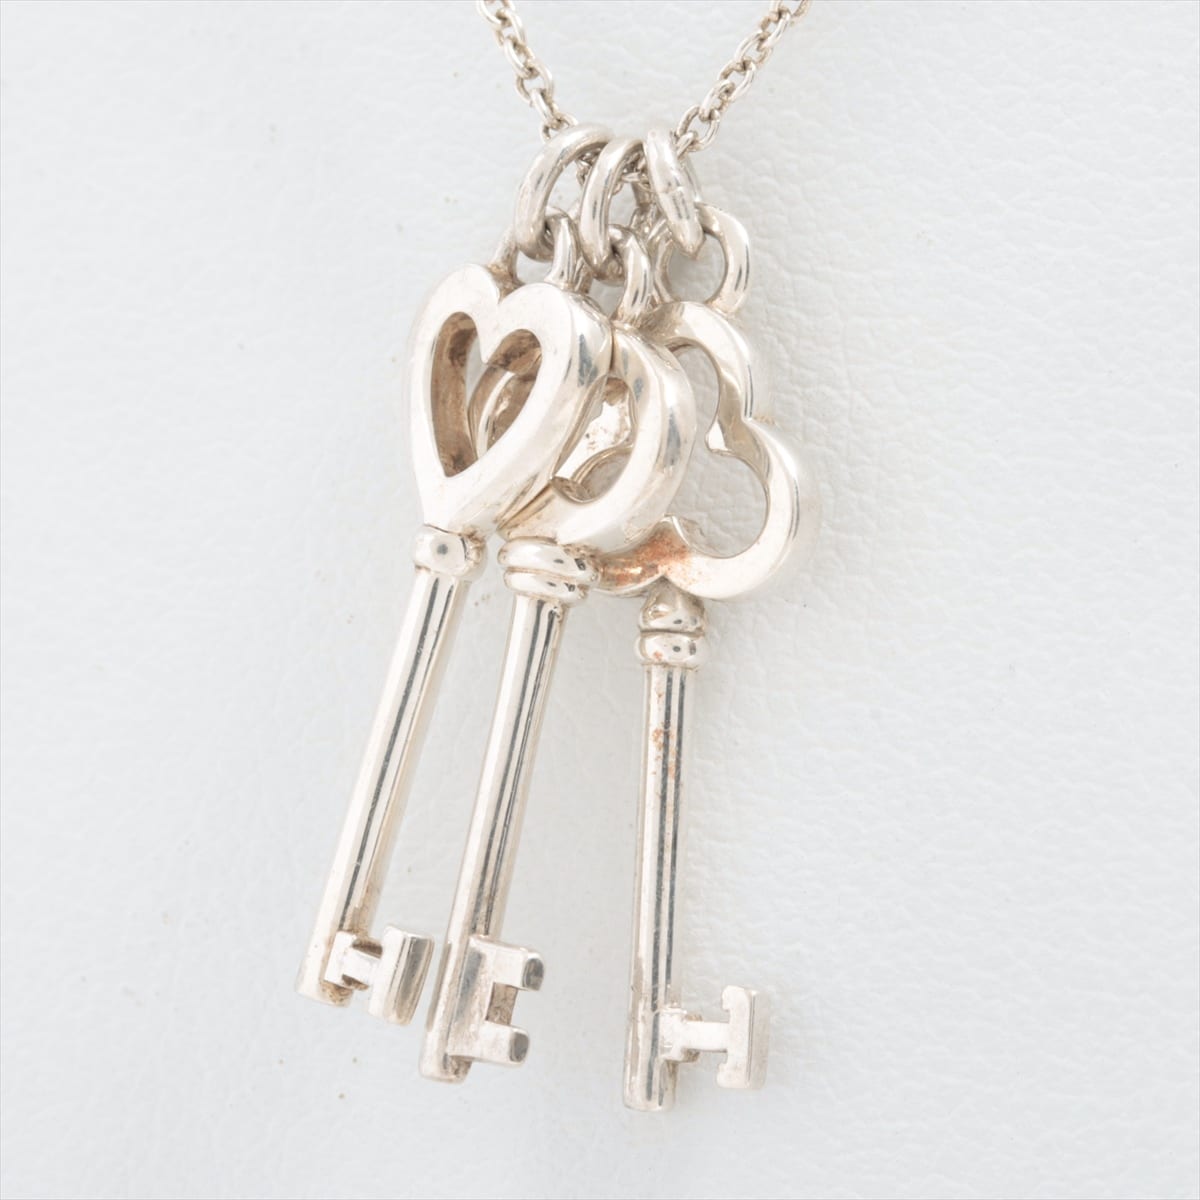 Tiffany Sleeky Necklace 925 2.8g Silver